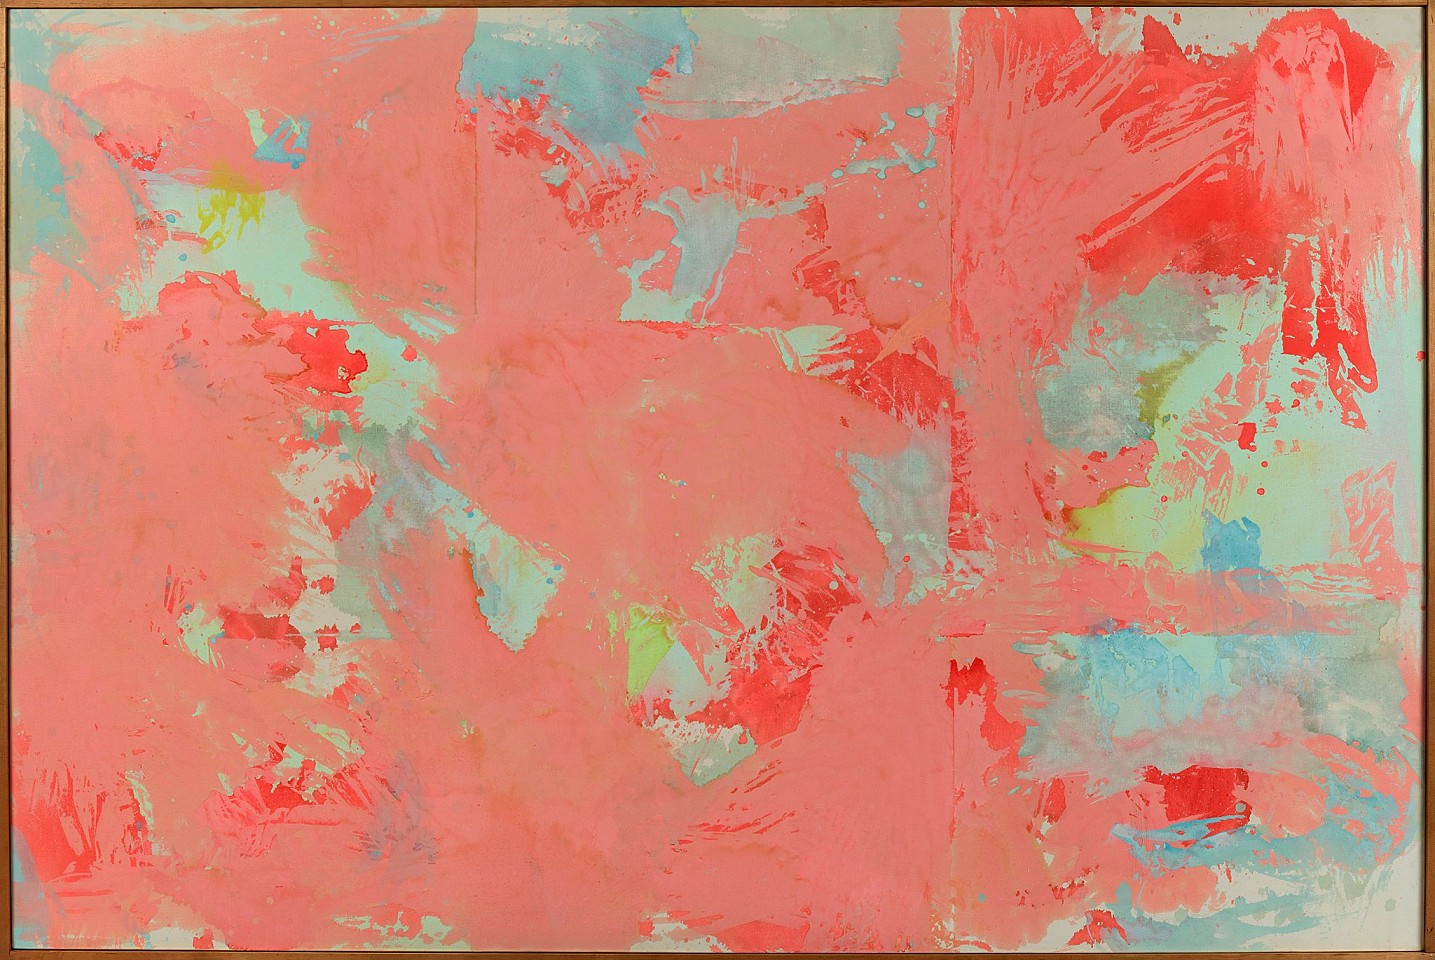 Walter Darby Bannard, Western Air #5, 1969
Alkylin resin on canvas, 67 x 99 in. (170.2 x 251.5 cm)
BAN-00142